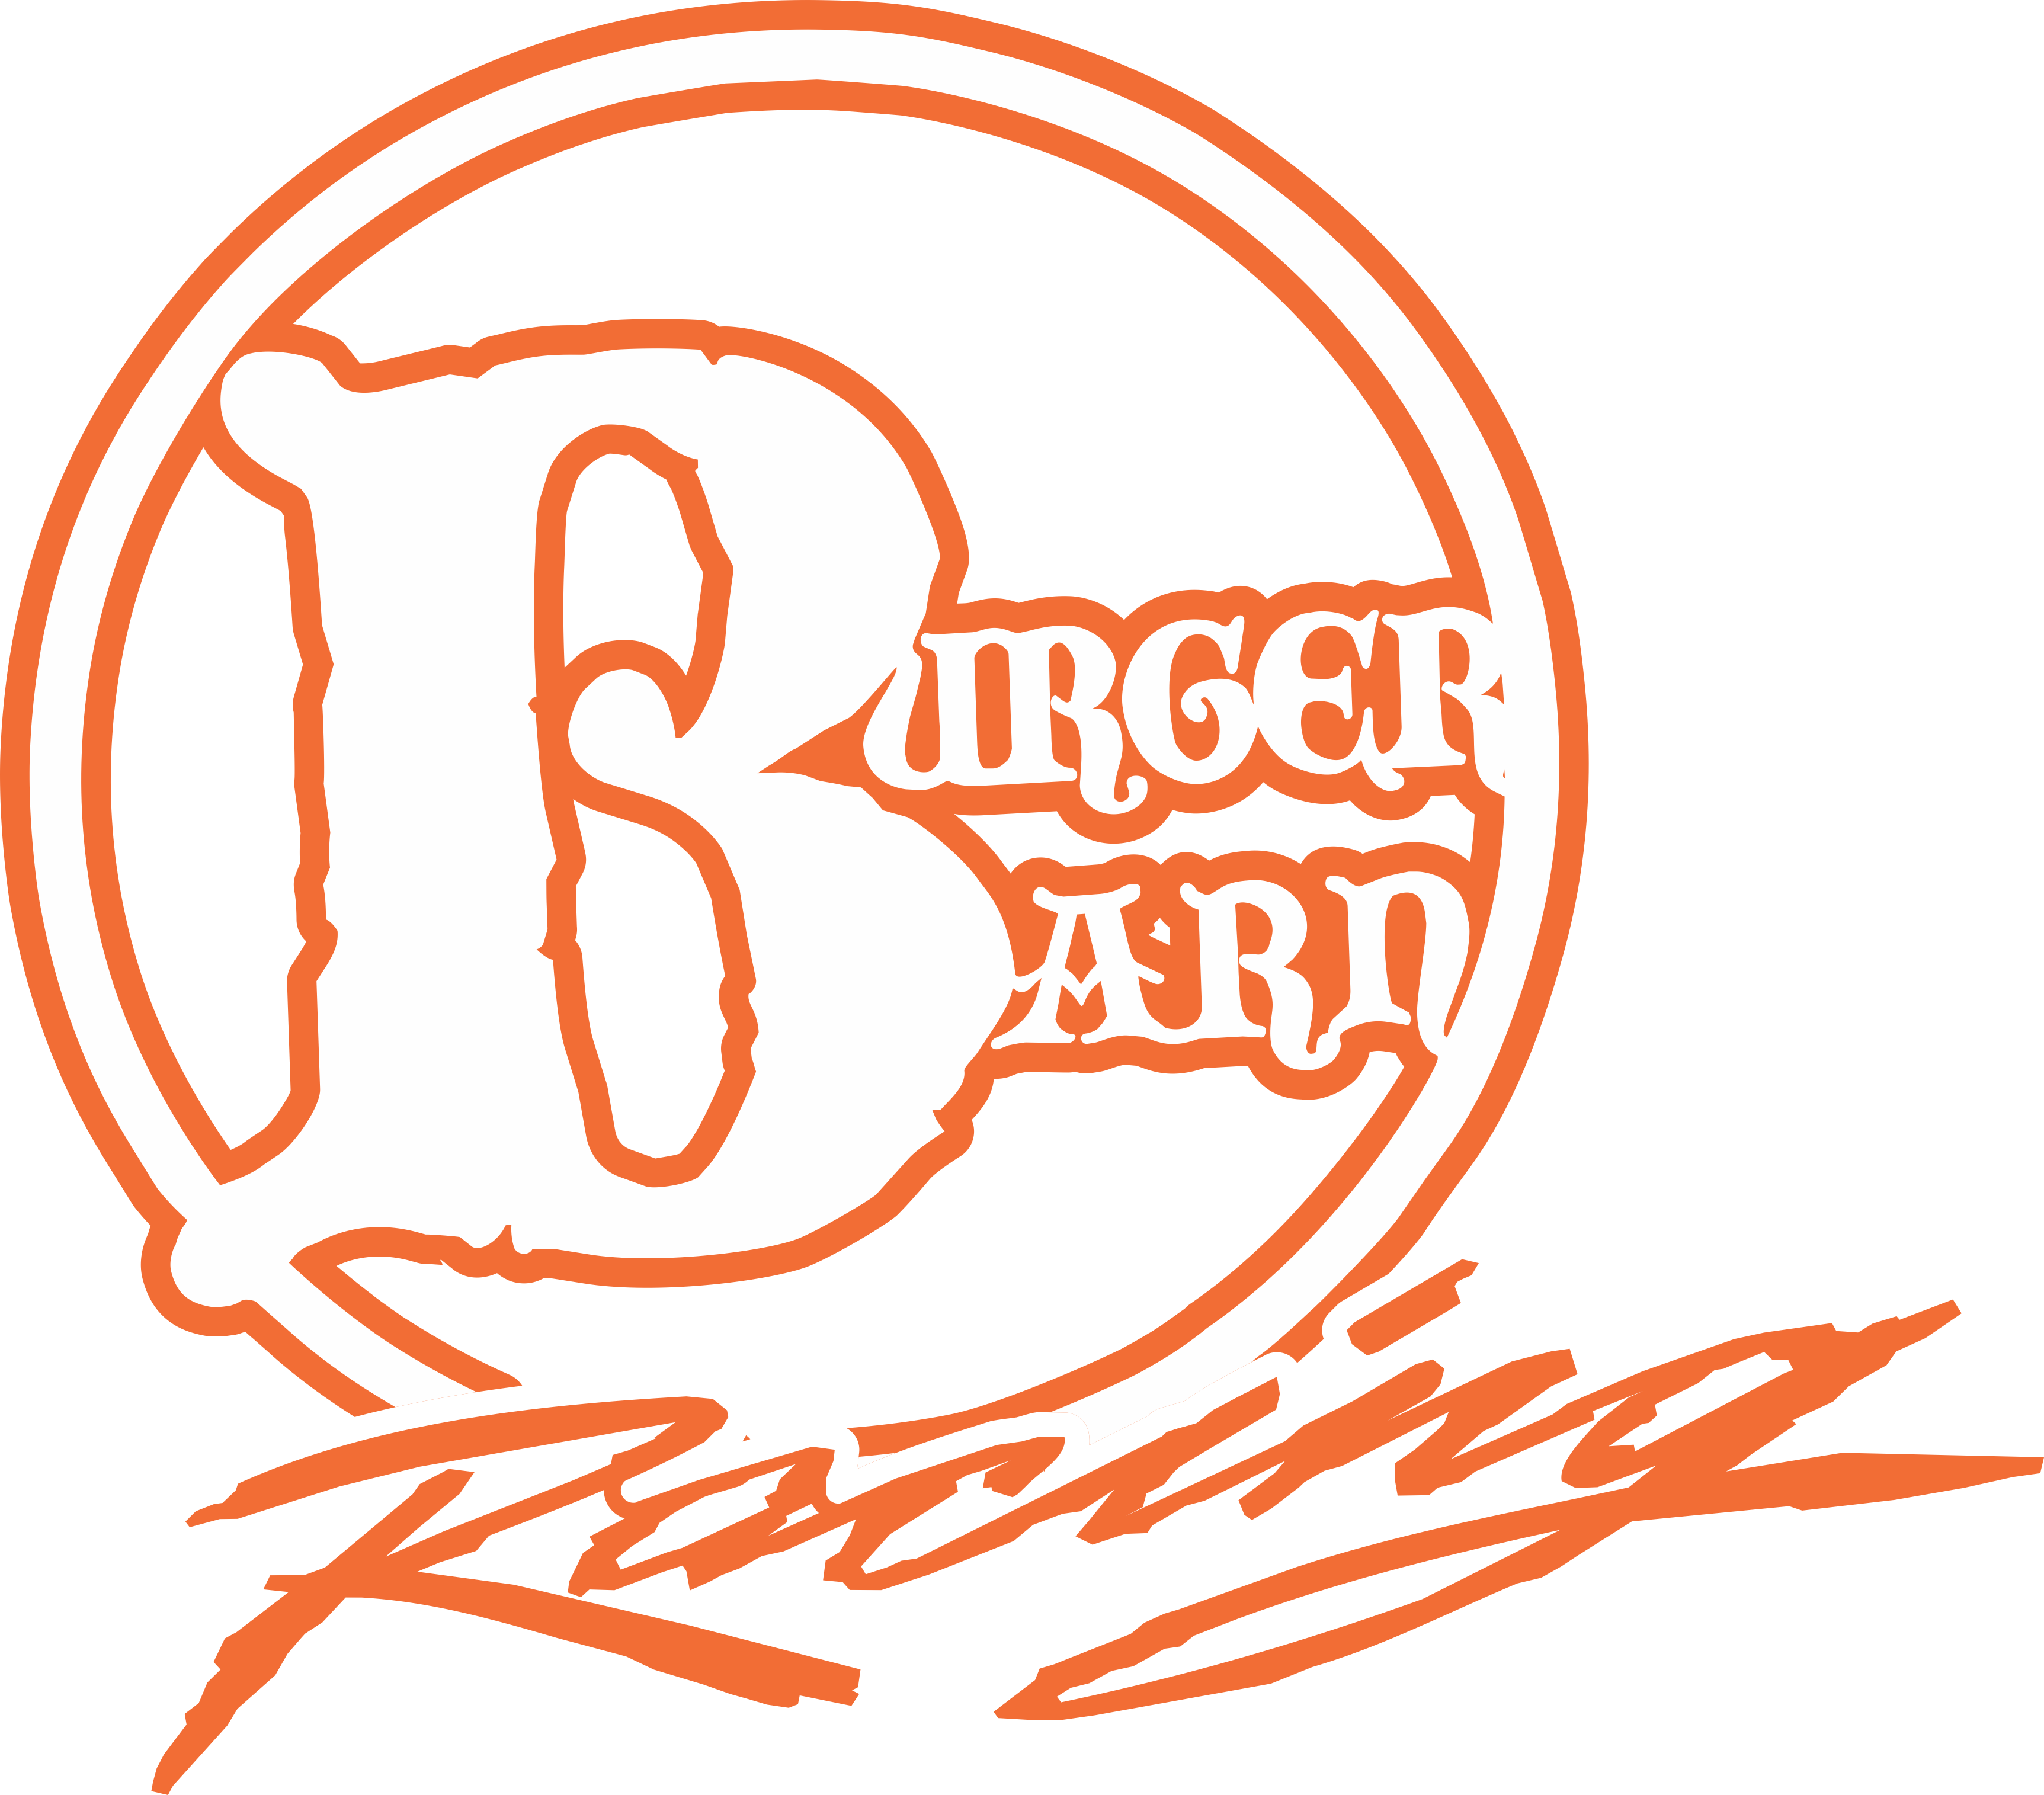 Burger Barn Racing Ladies' T-Shirt